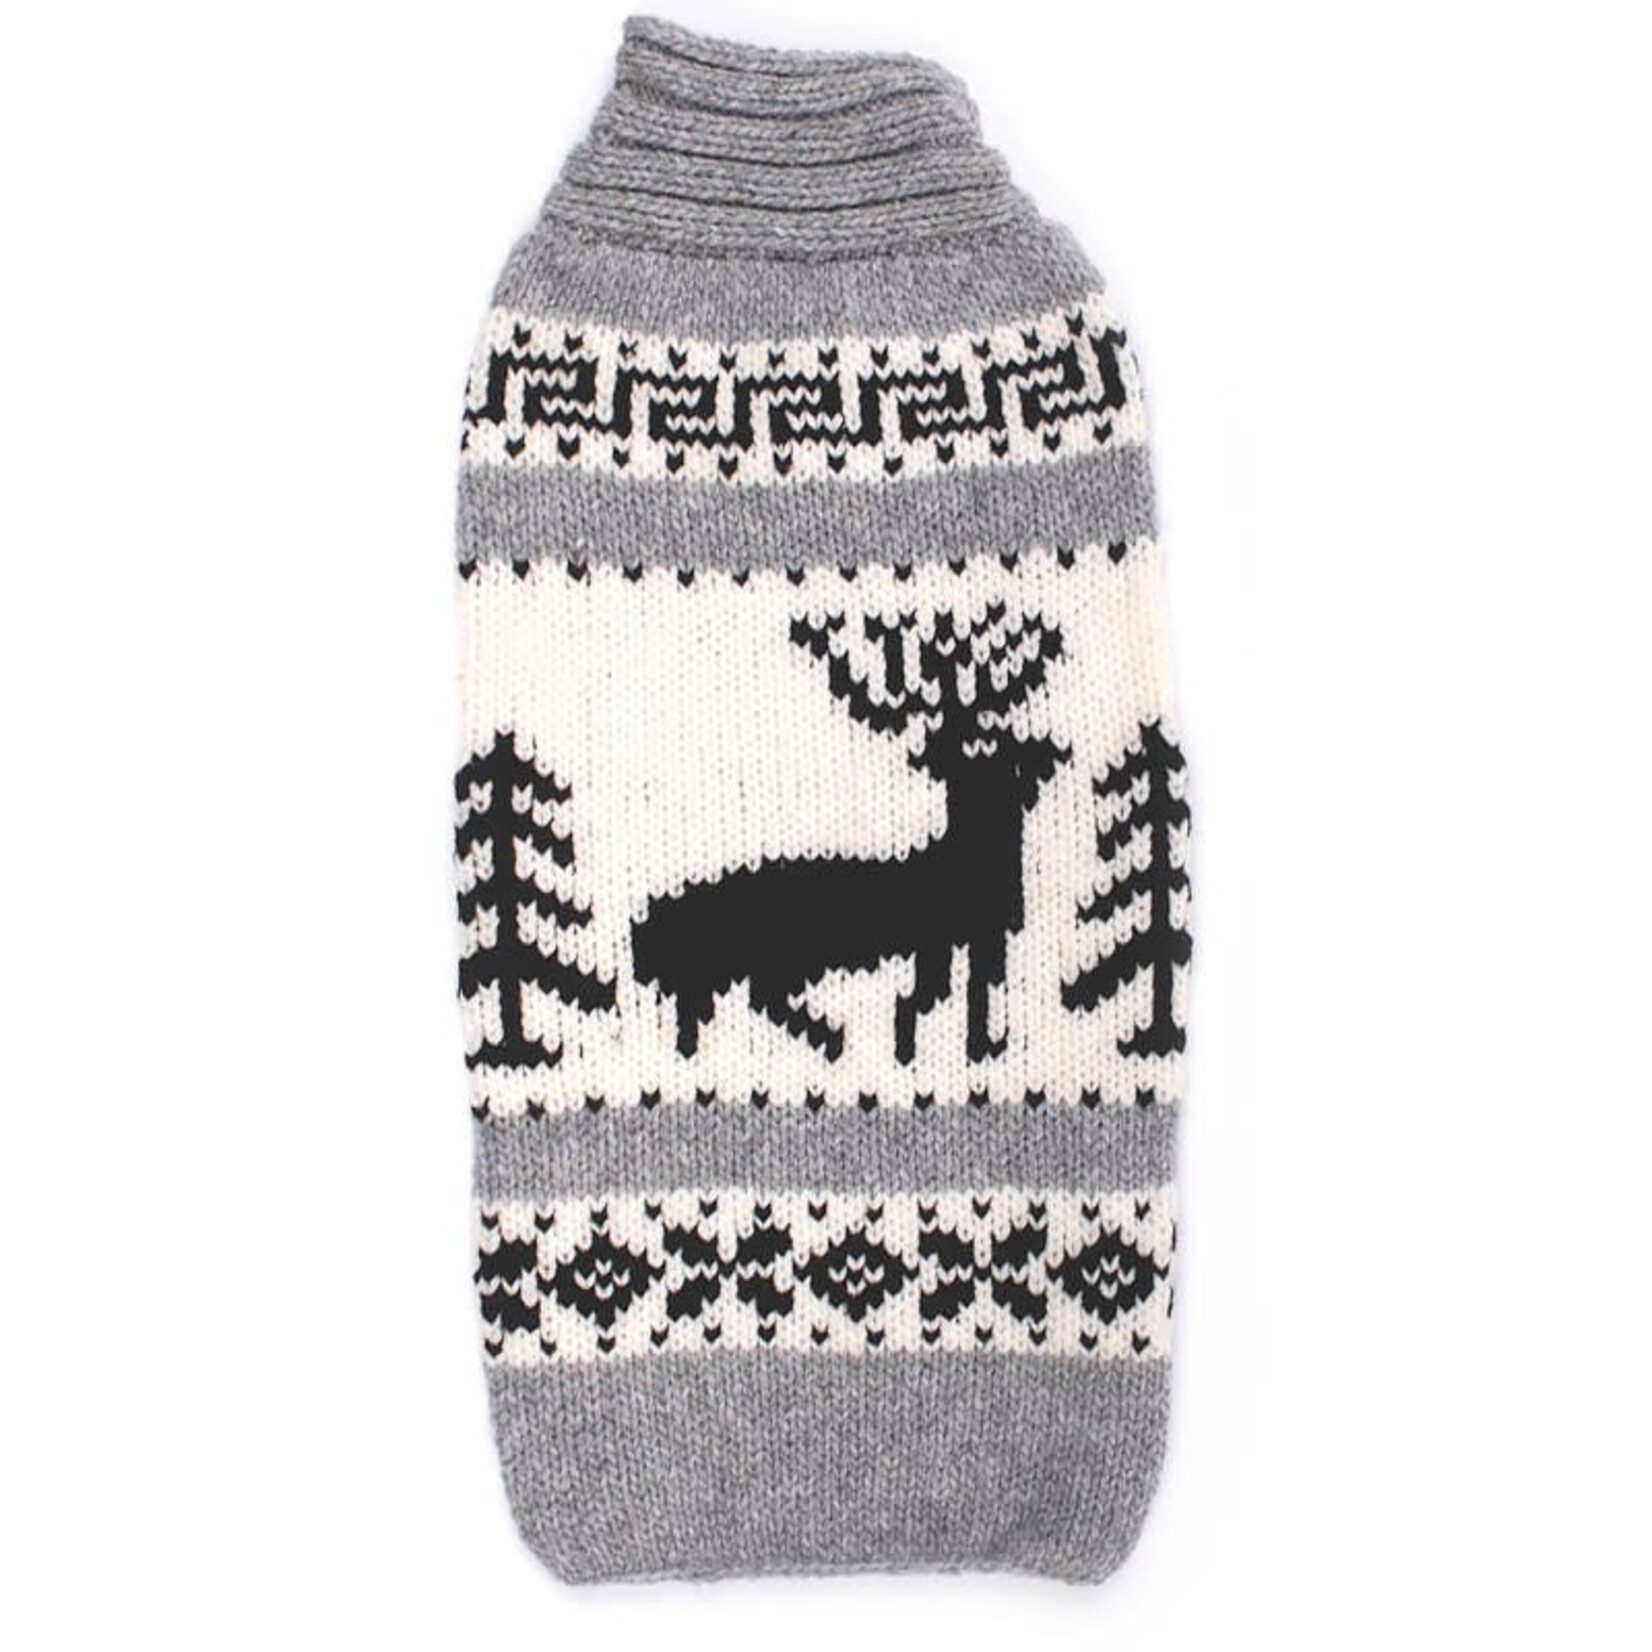 Chilly Dog Sweaters - Reindeer Shawl -  XXS